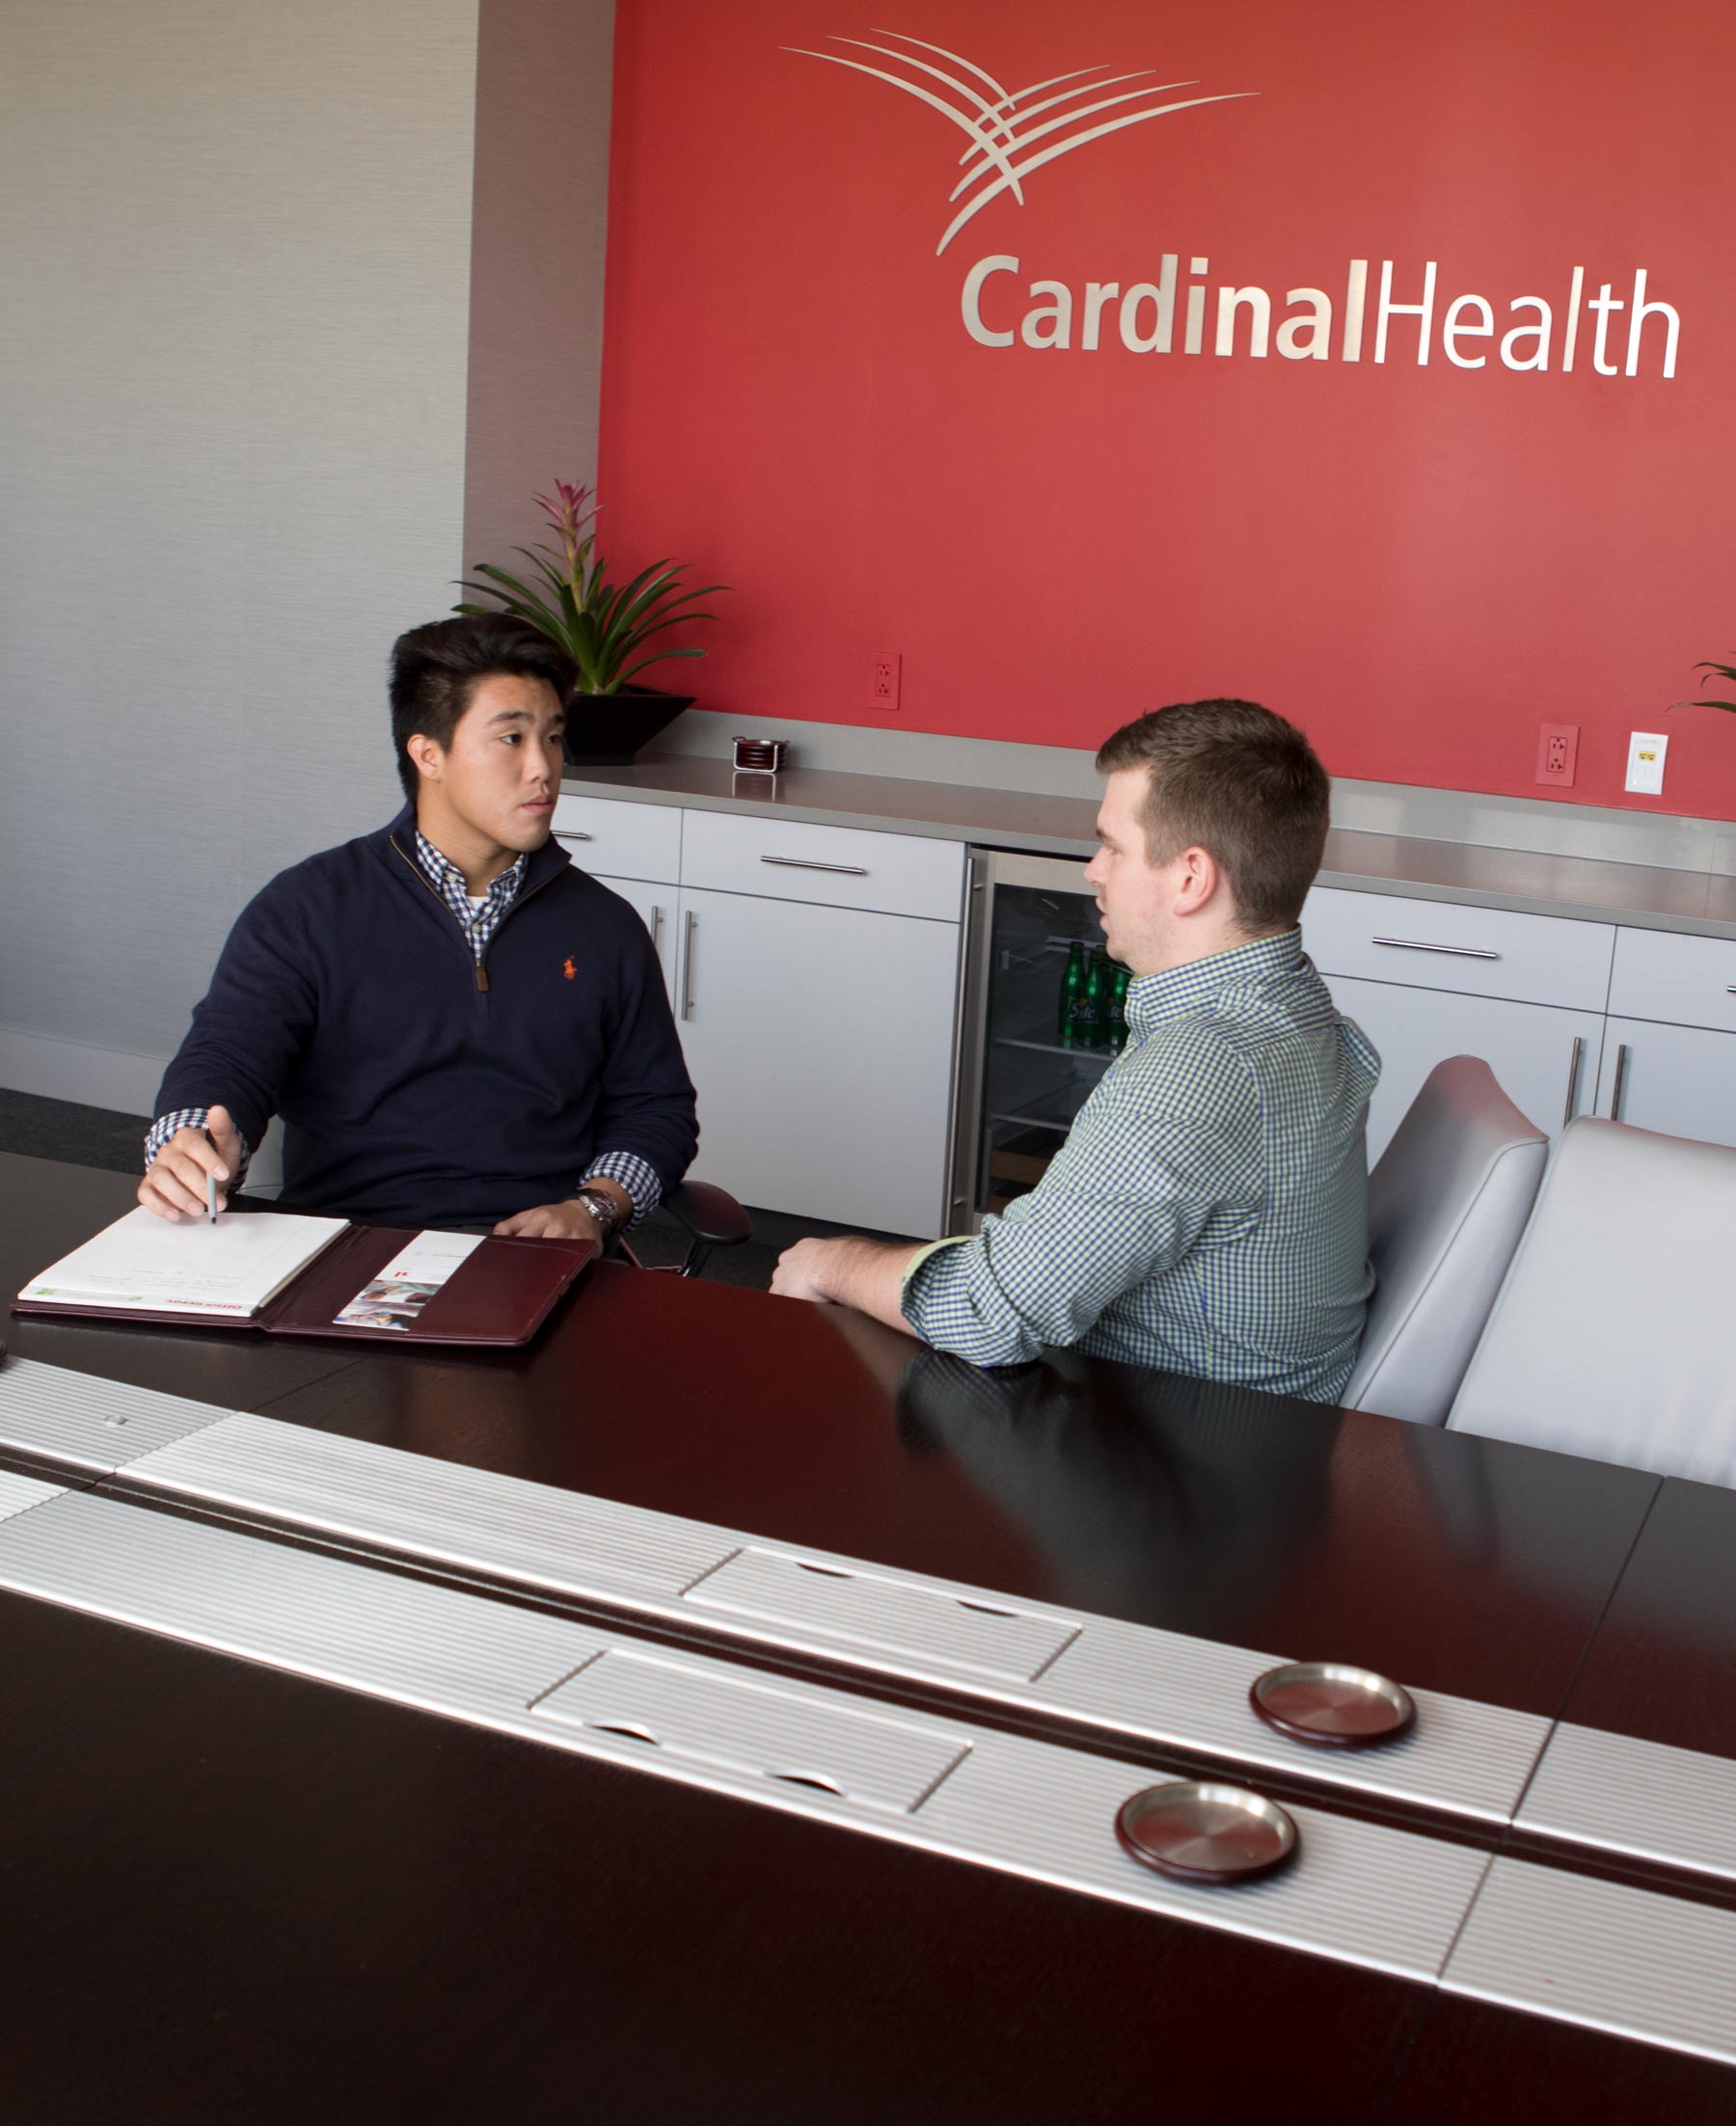 Meeting at Cardinal Health